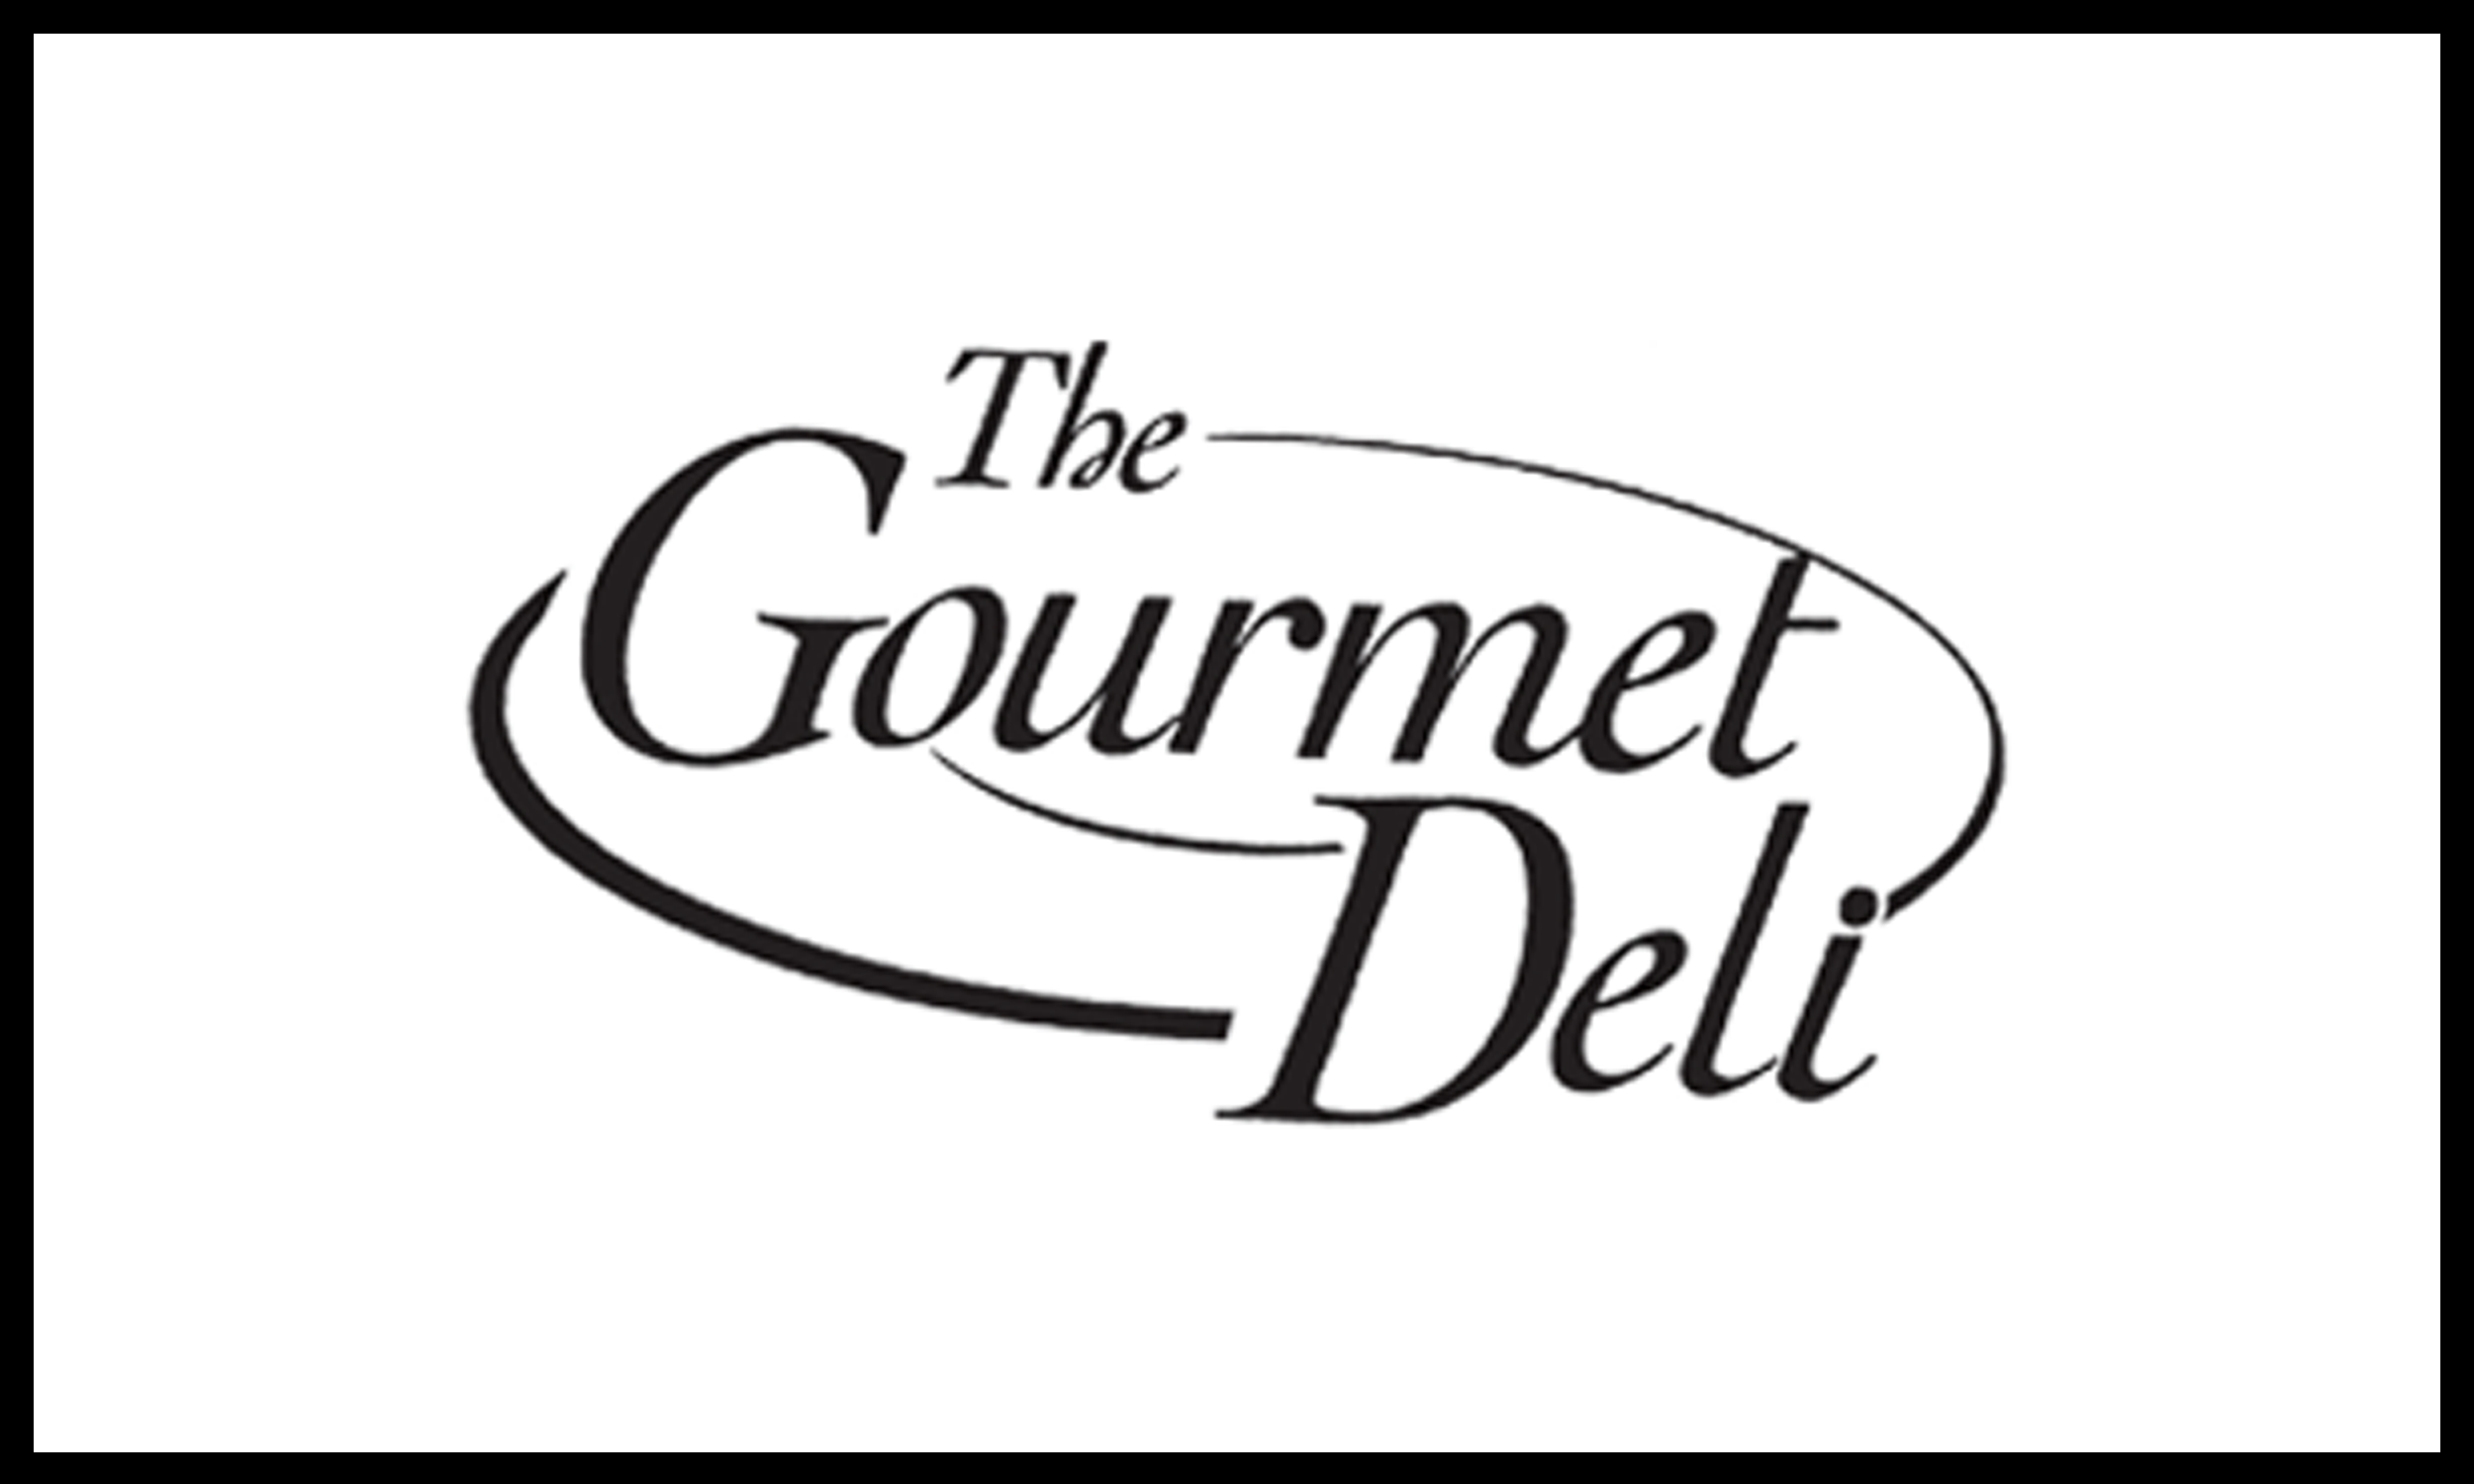 The Gourmet Deli